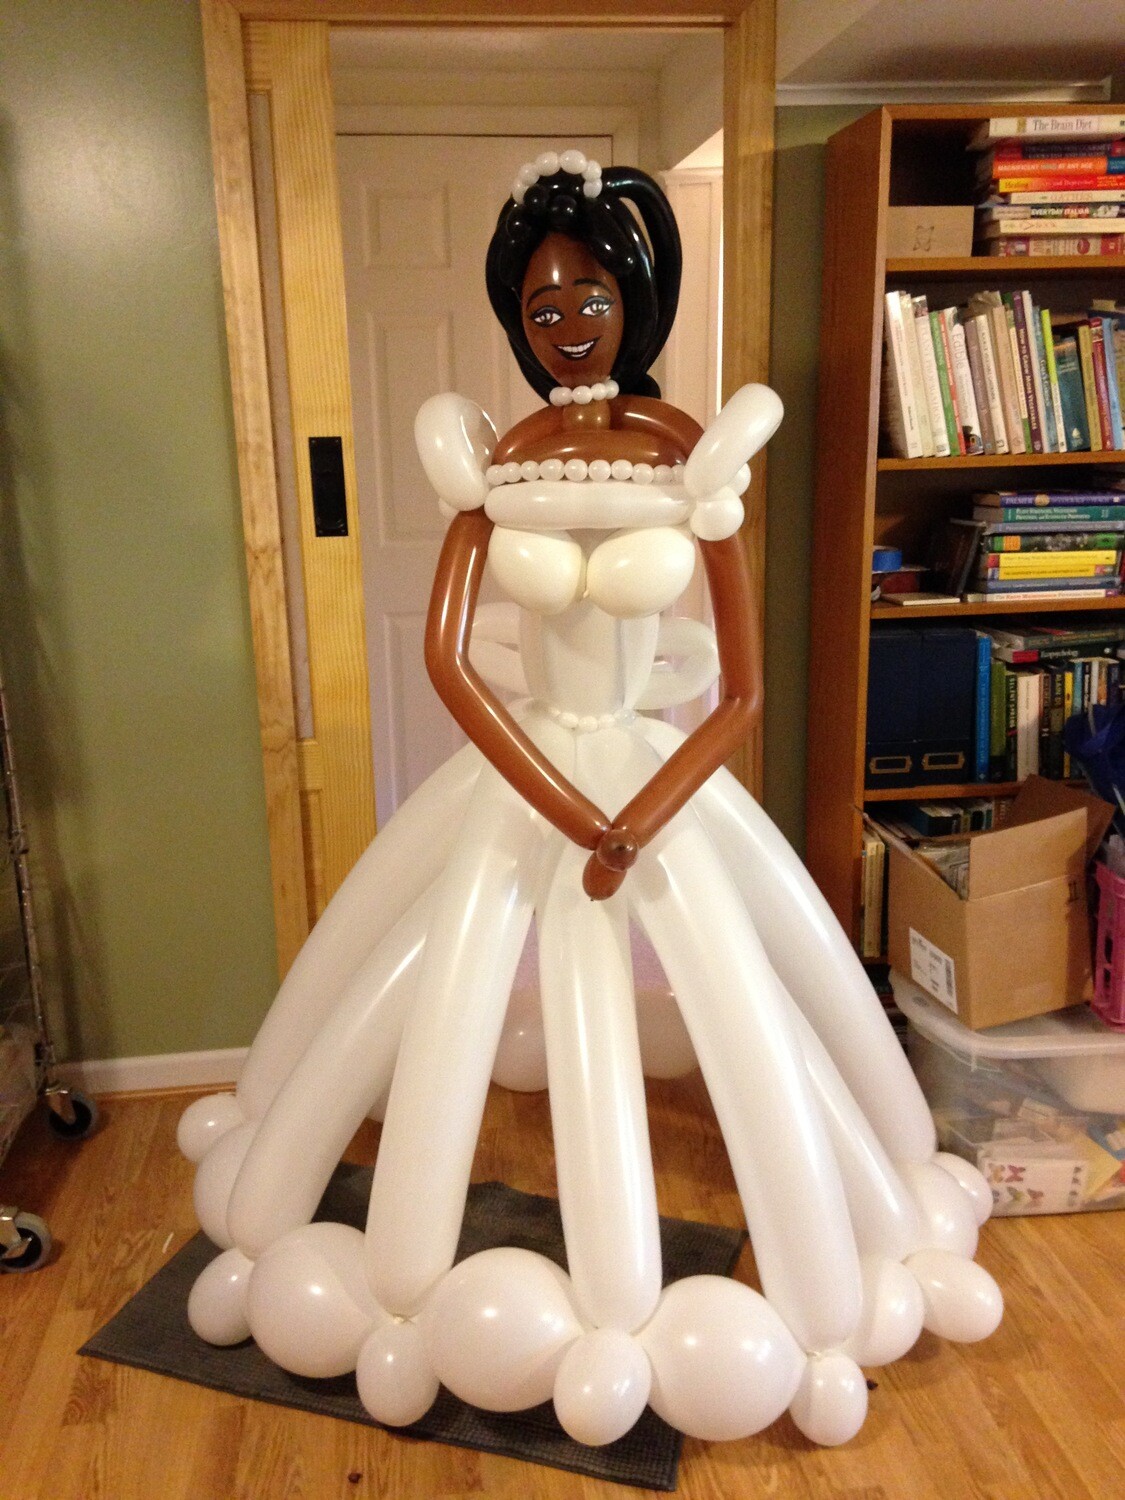 Giant wedding balloon bride statue, full ball gown